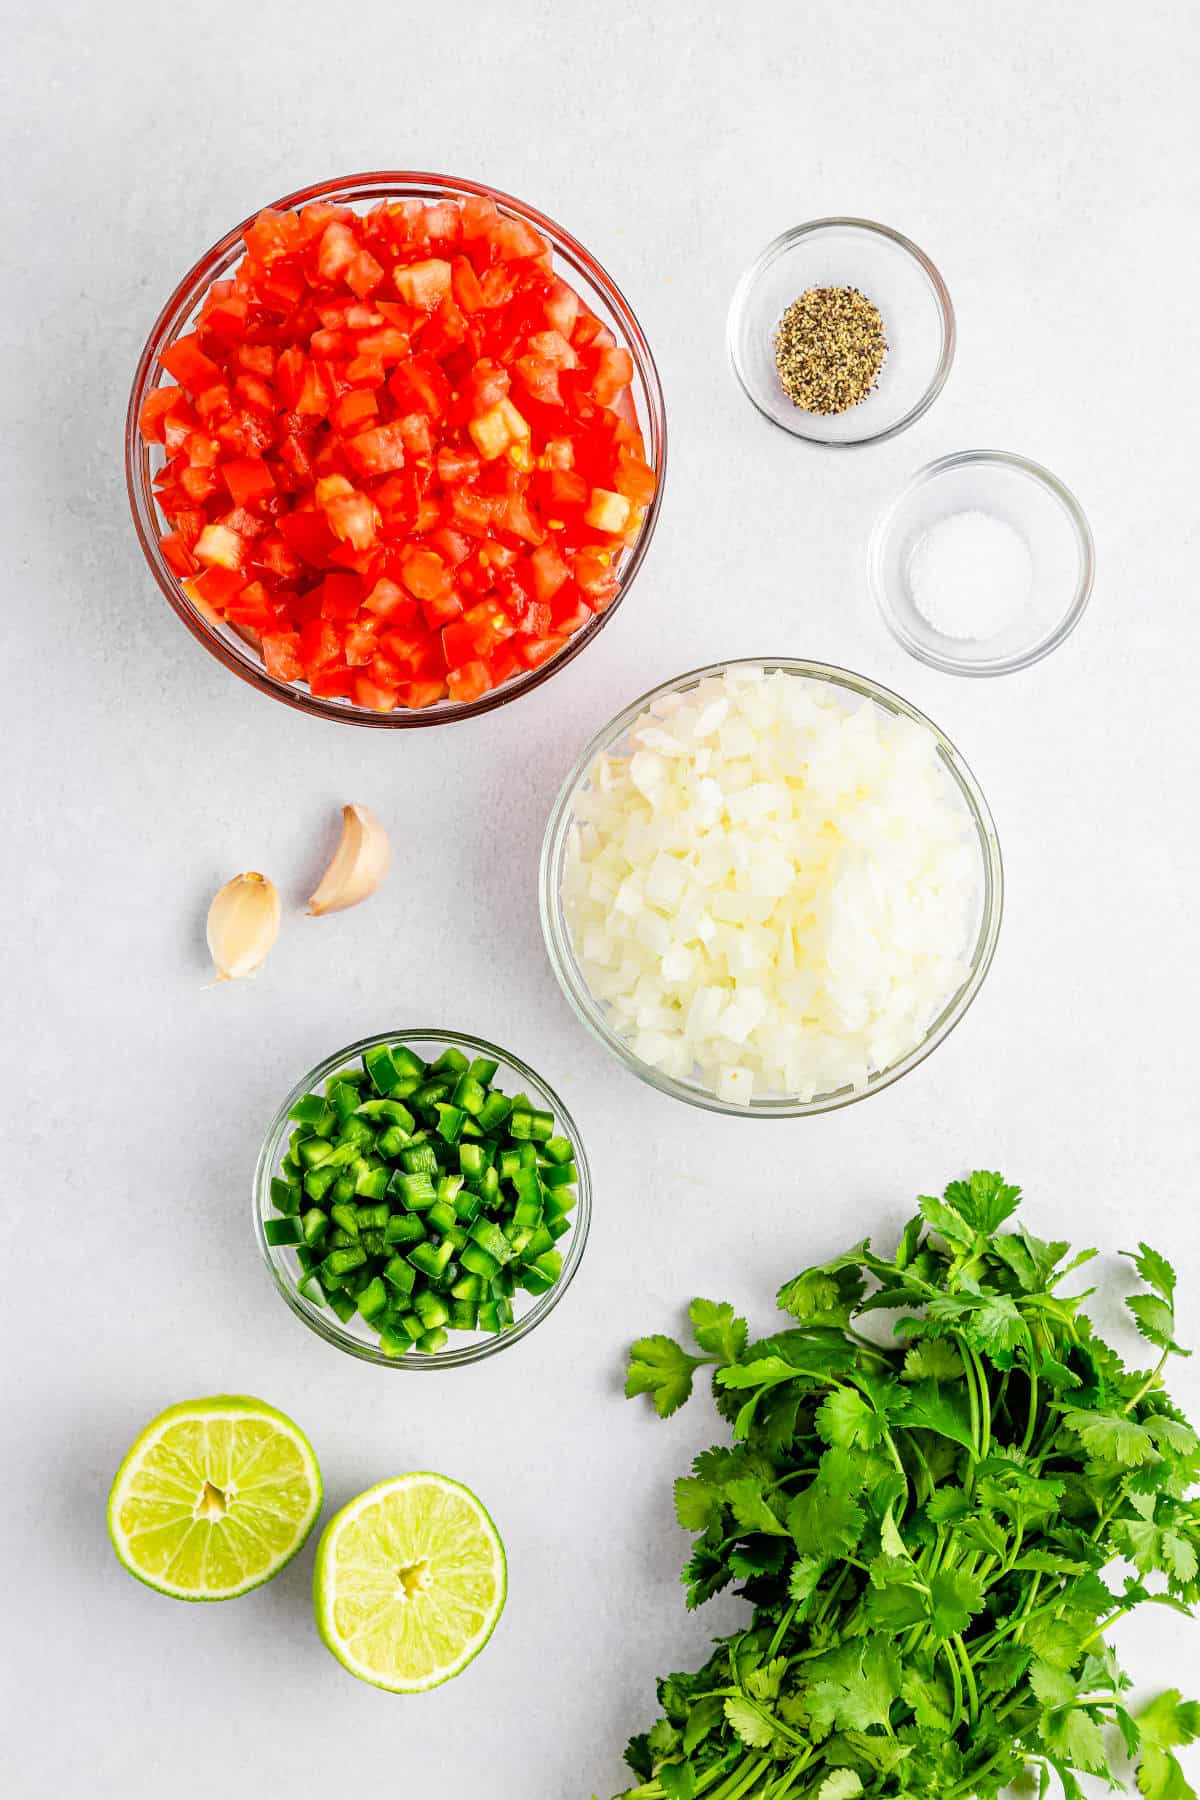 Pico de Gallo ingredients on a white countertop: tomatoes, onion, jalapeño, cilantro, garlic, lime, salt, and pepper.